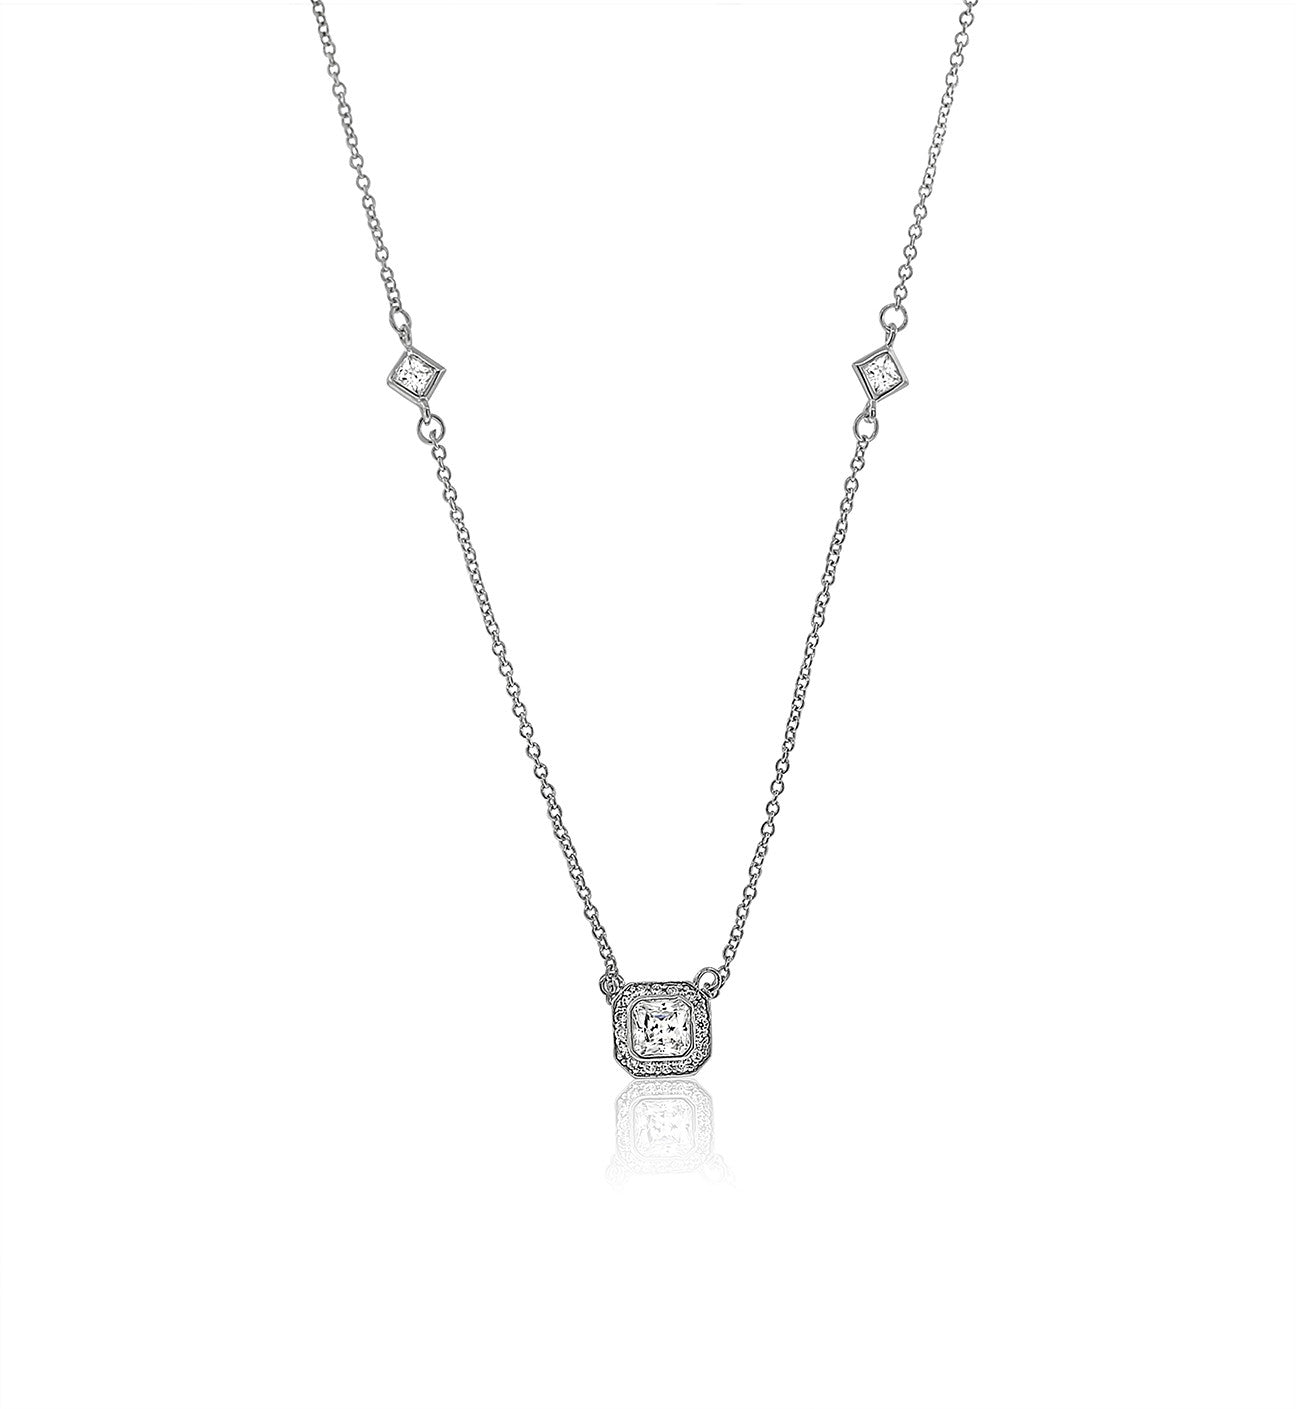 Cushion Cut cz Diamond Solitaire Pendant necklace - Bobby Schandra